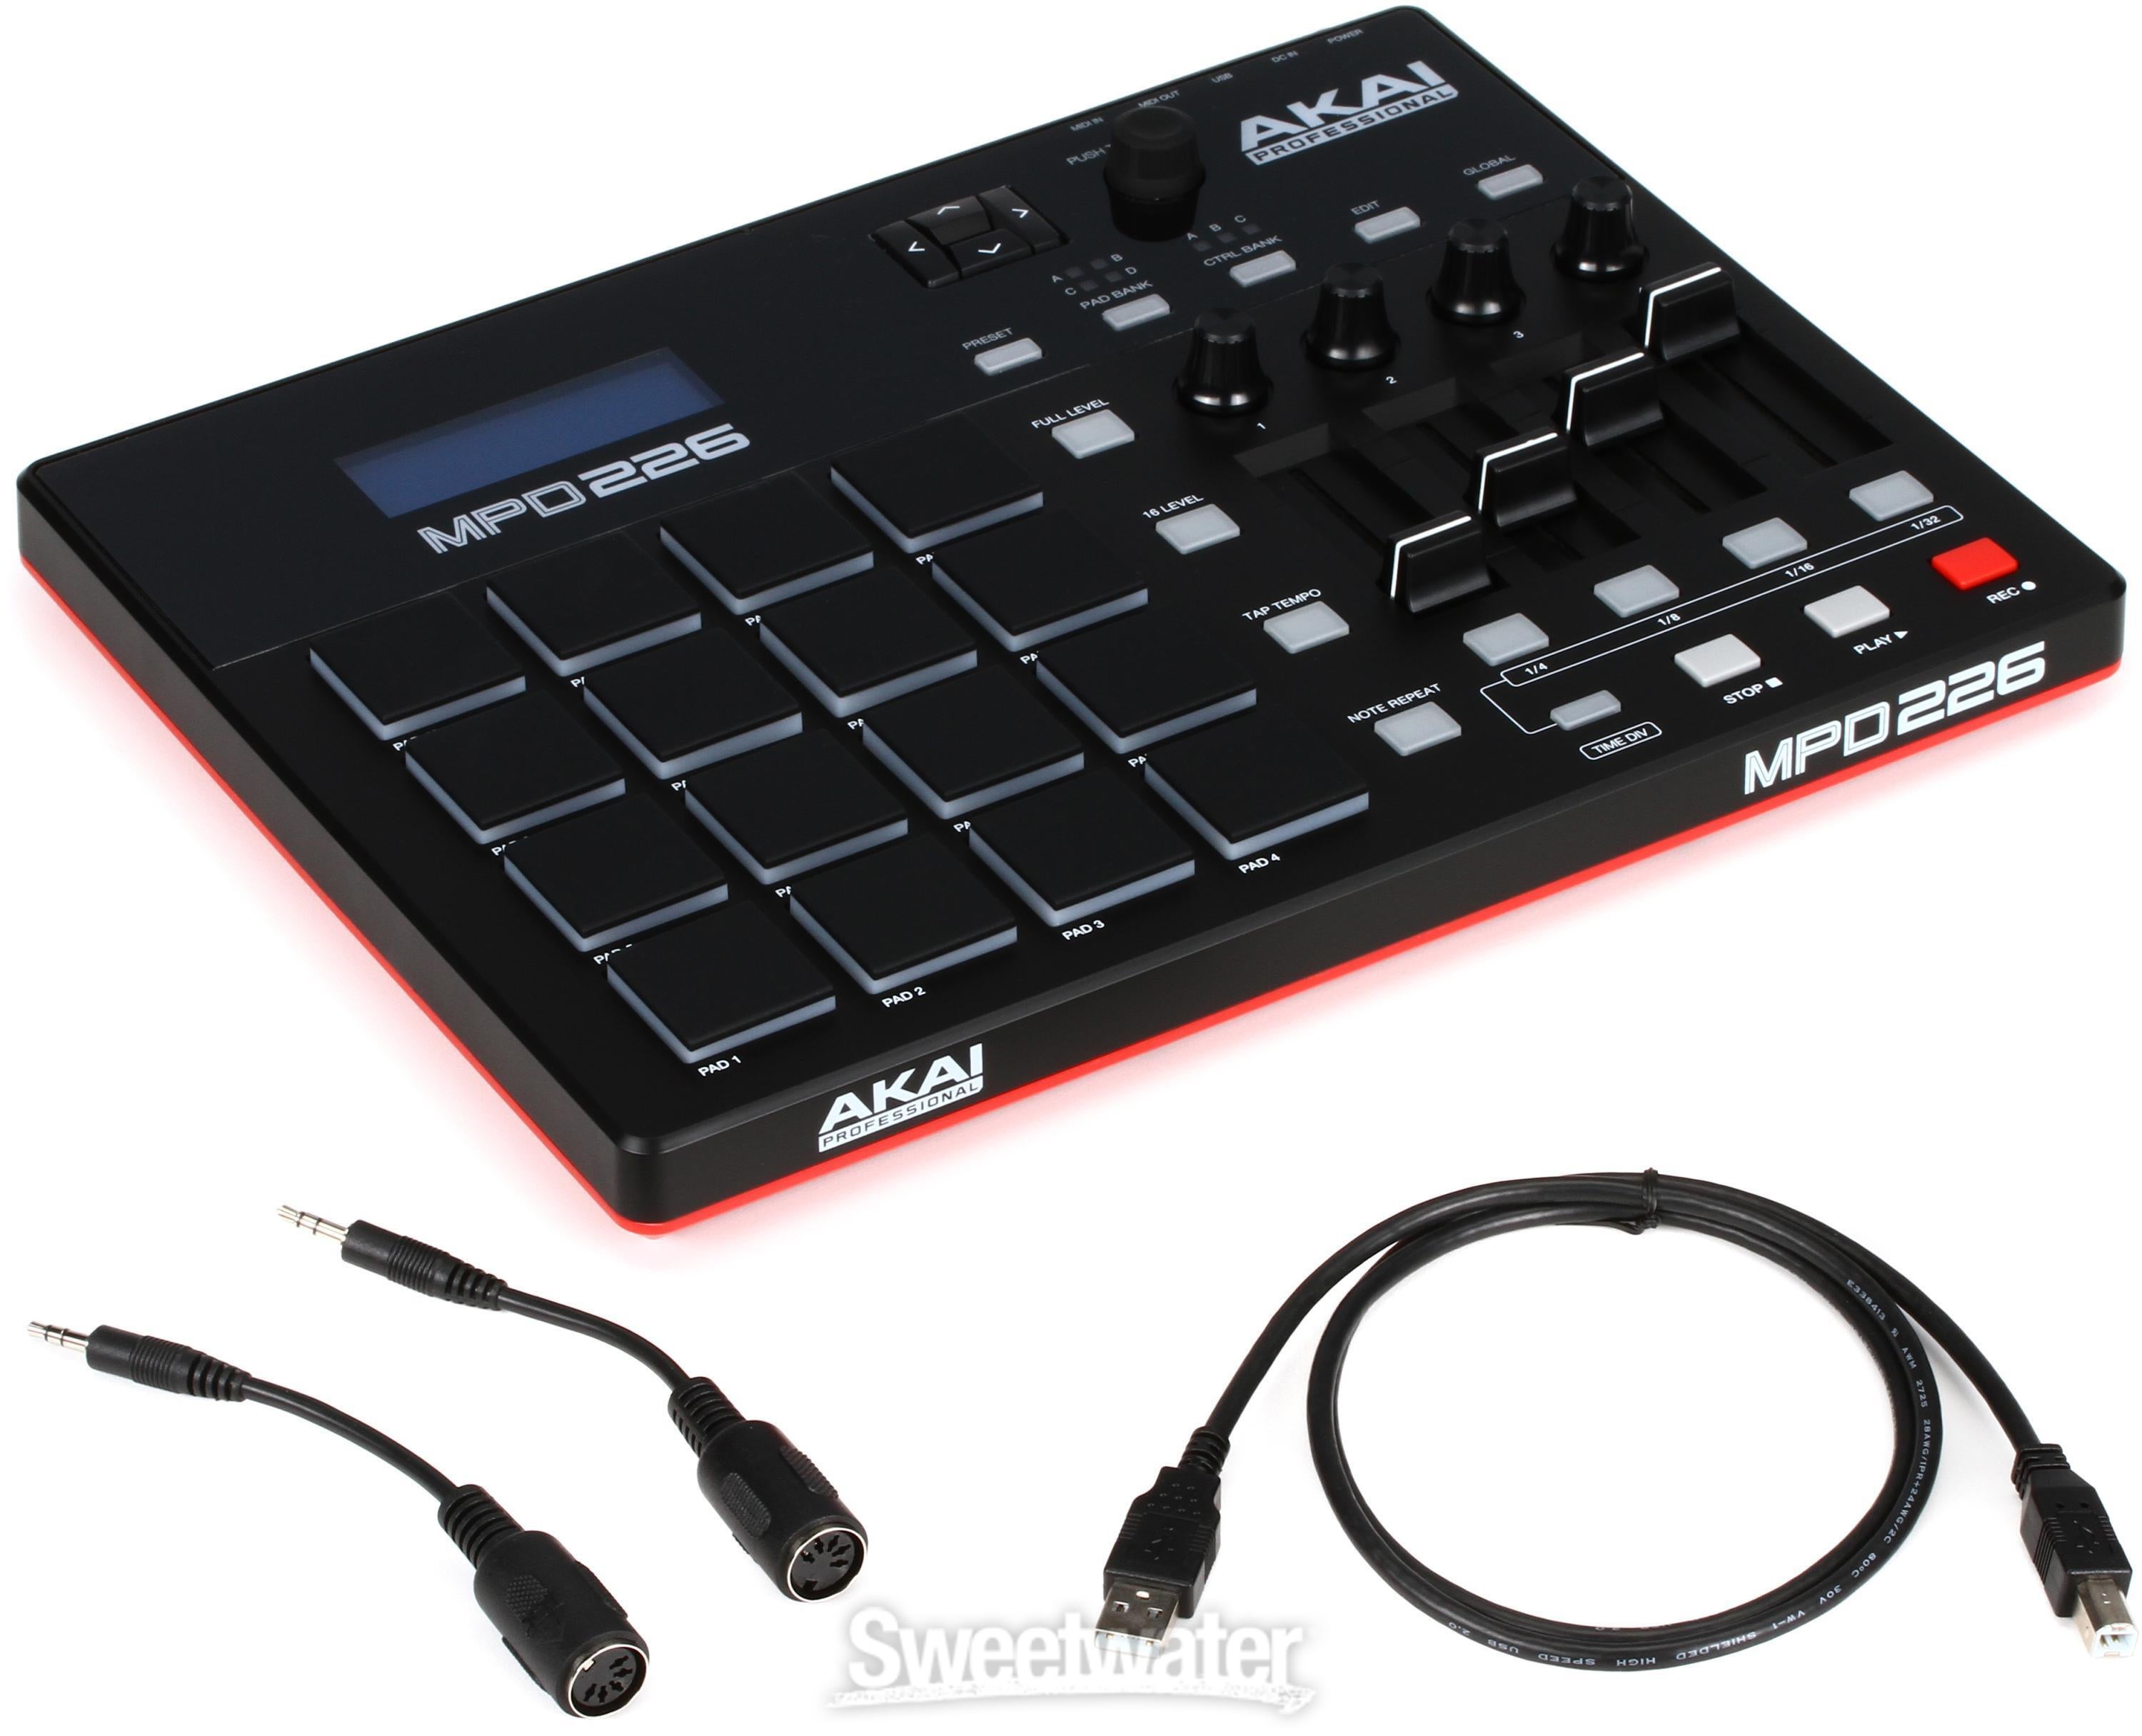 Akai Professional MPD226 16-Pad MIDI Controller | Sweetwater